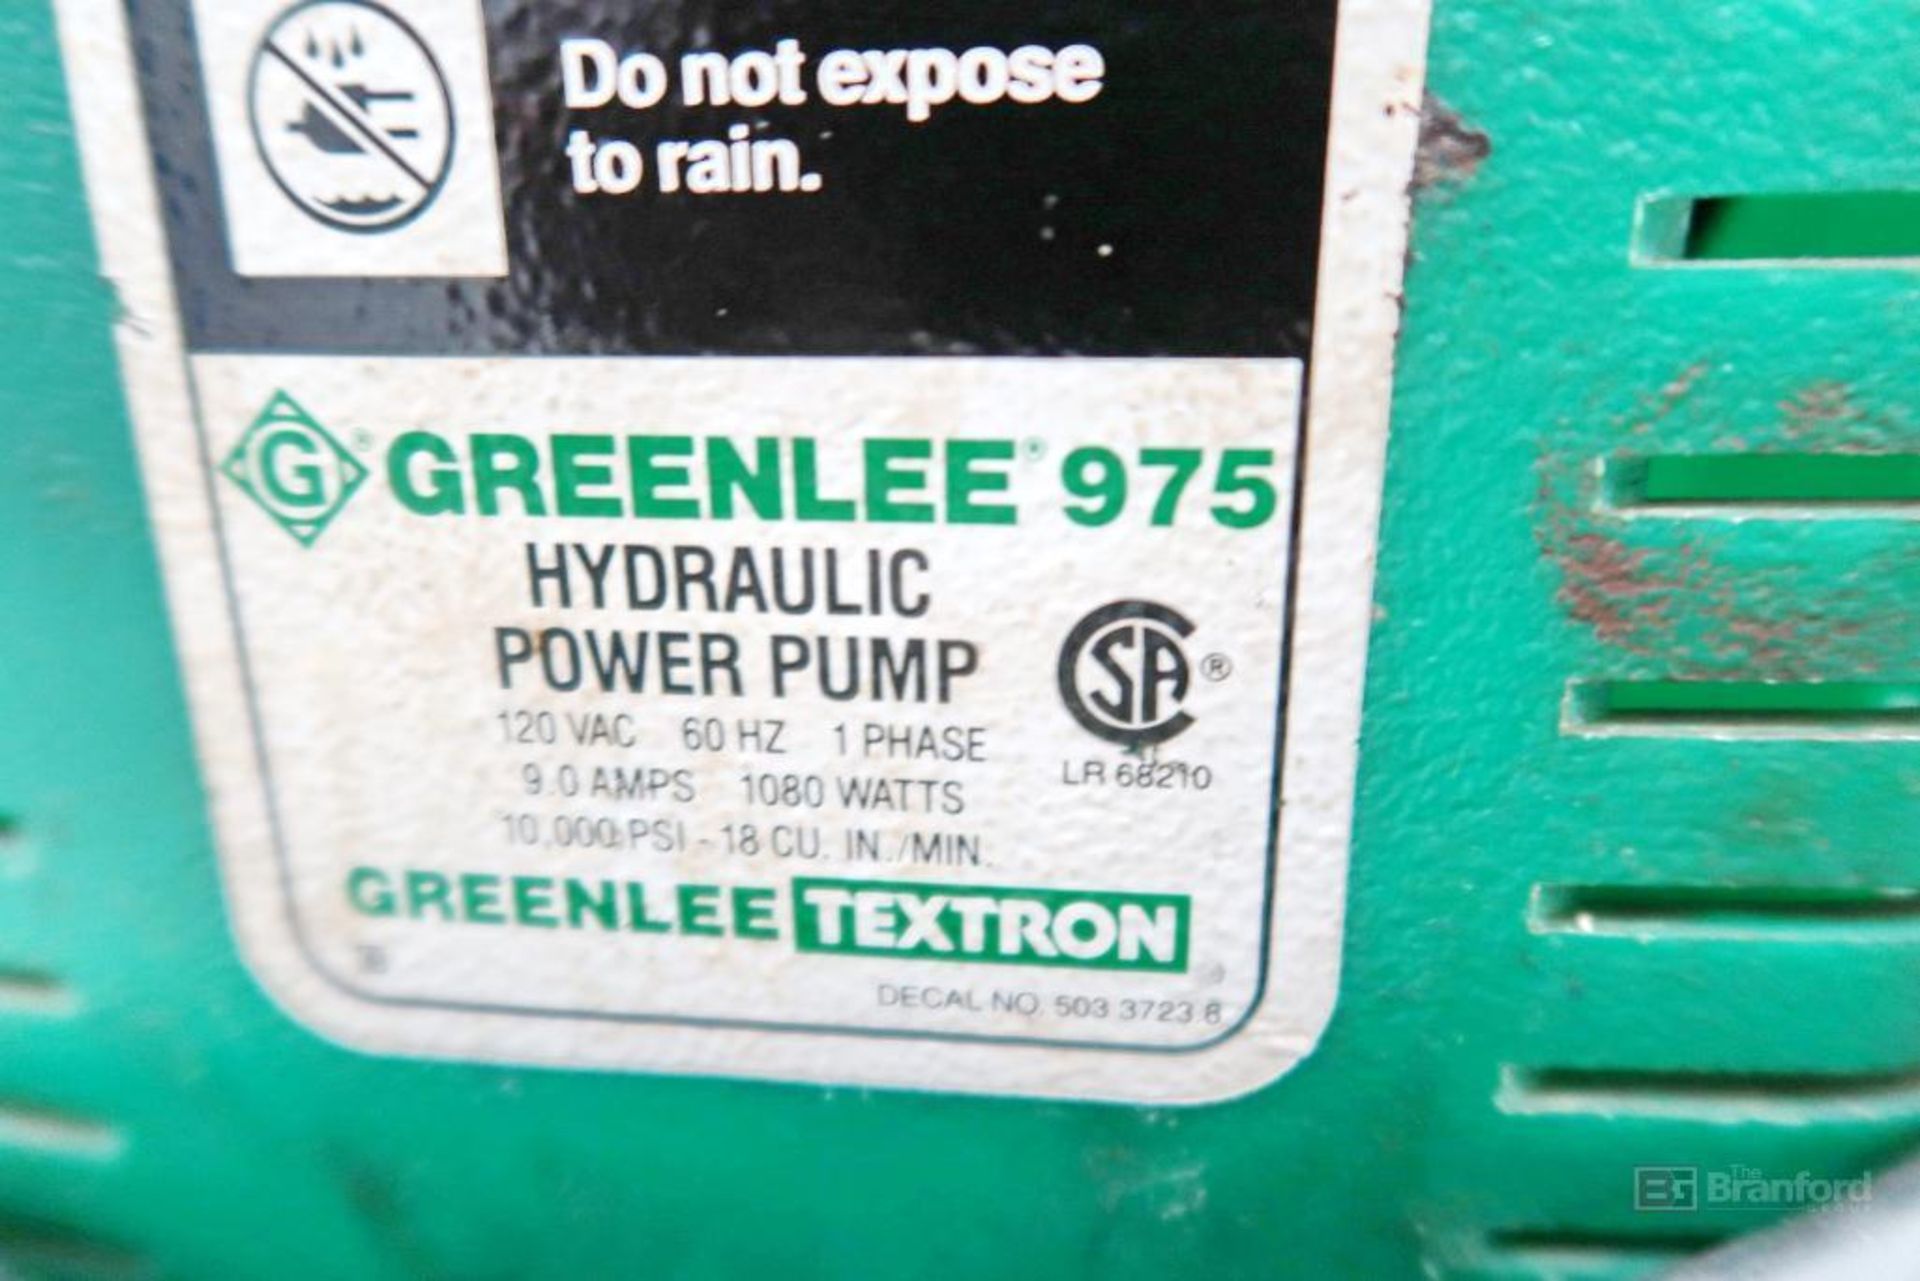 Greenlee Hydraulic Power Pump 975 - Image 4 of 8